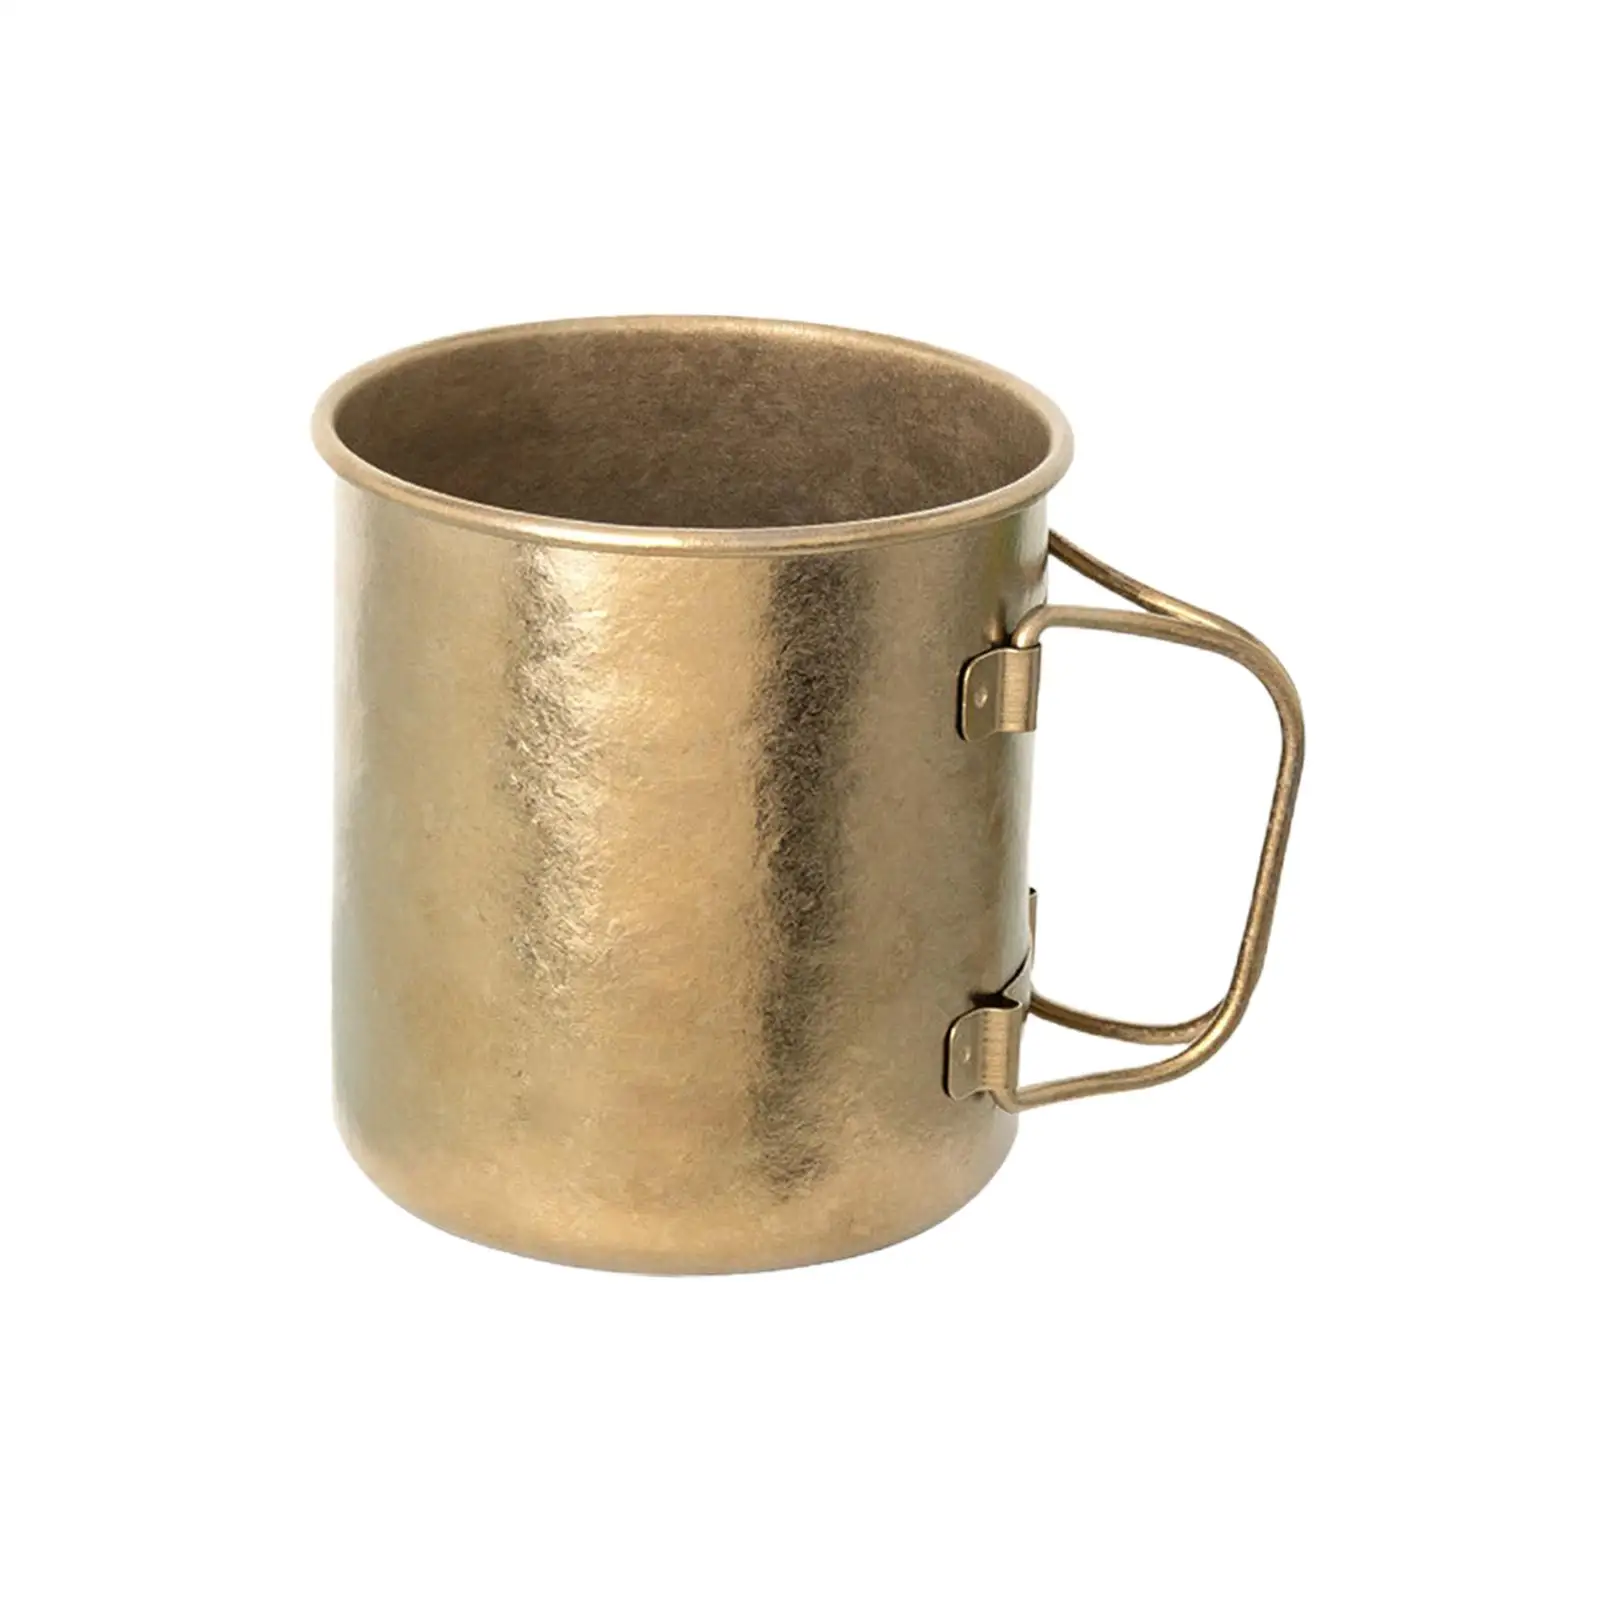 450ml Can Be Boiled Water Mug, Practical Collapsible Handle Tableware Utensils